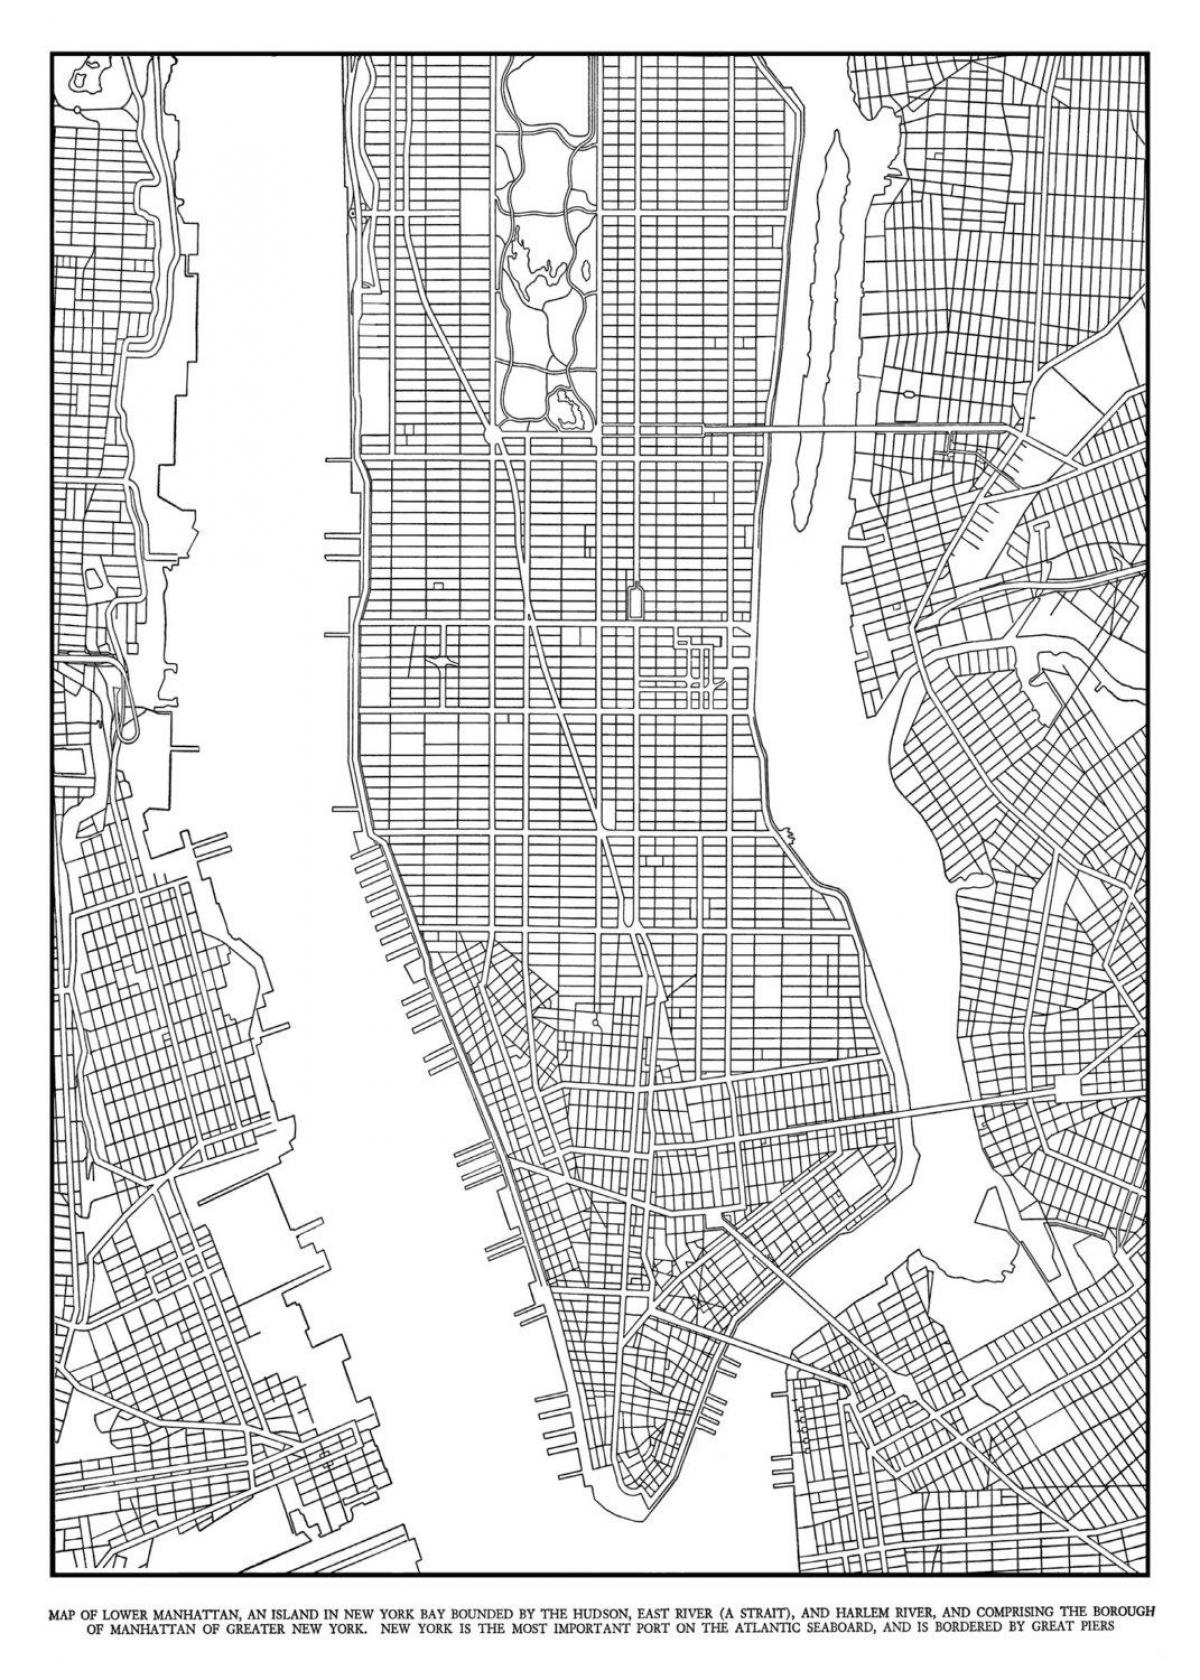 kort over Manhattans grid